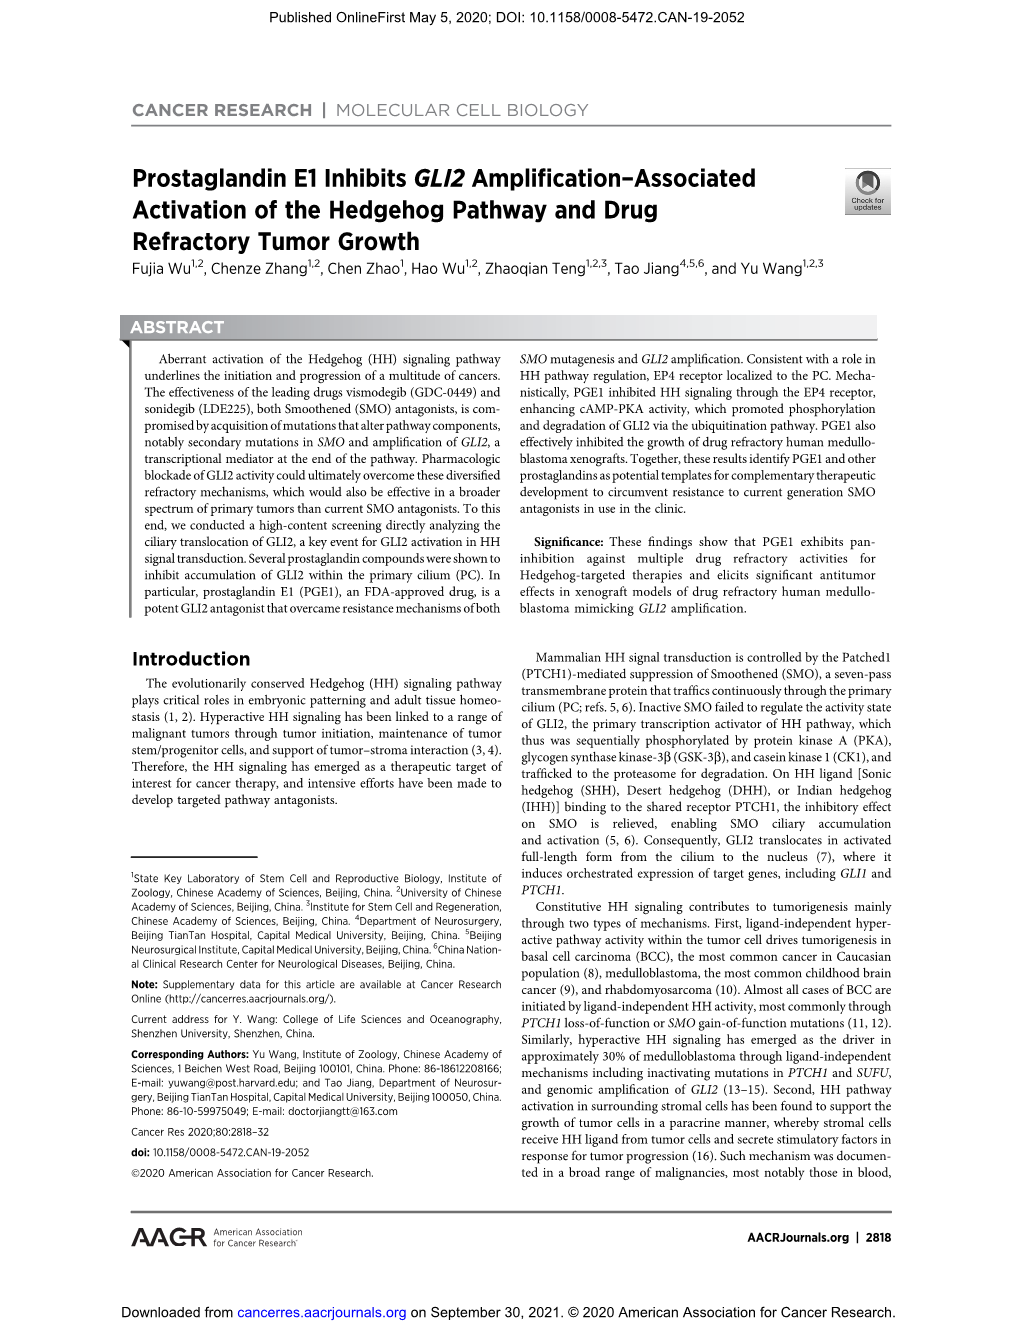 Prostaglandin E1 Inhibits GLI2 Amplification–Associated Activation